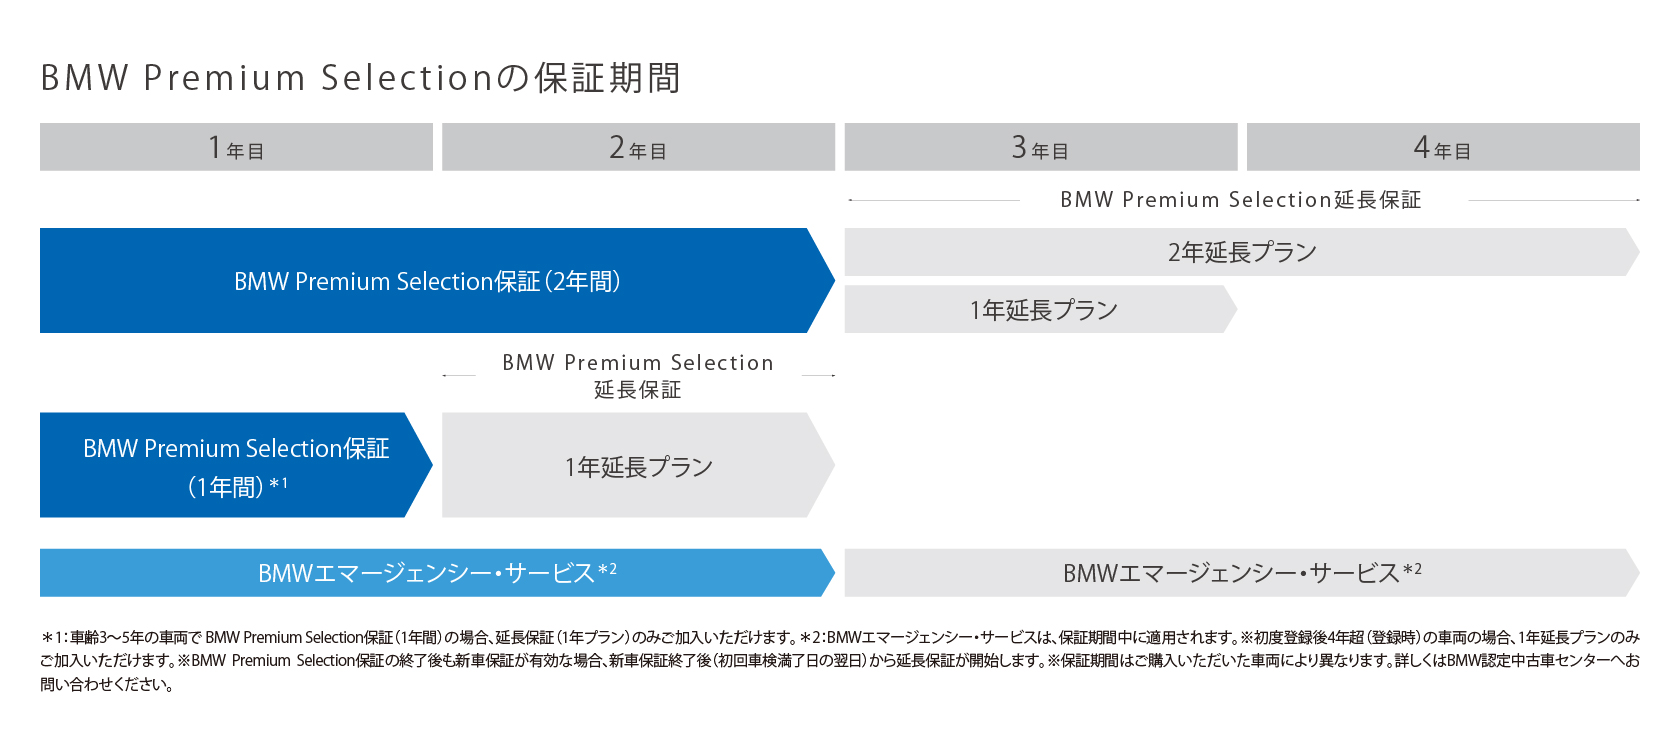 BMW Premium Selectionの保証期間